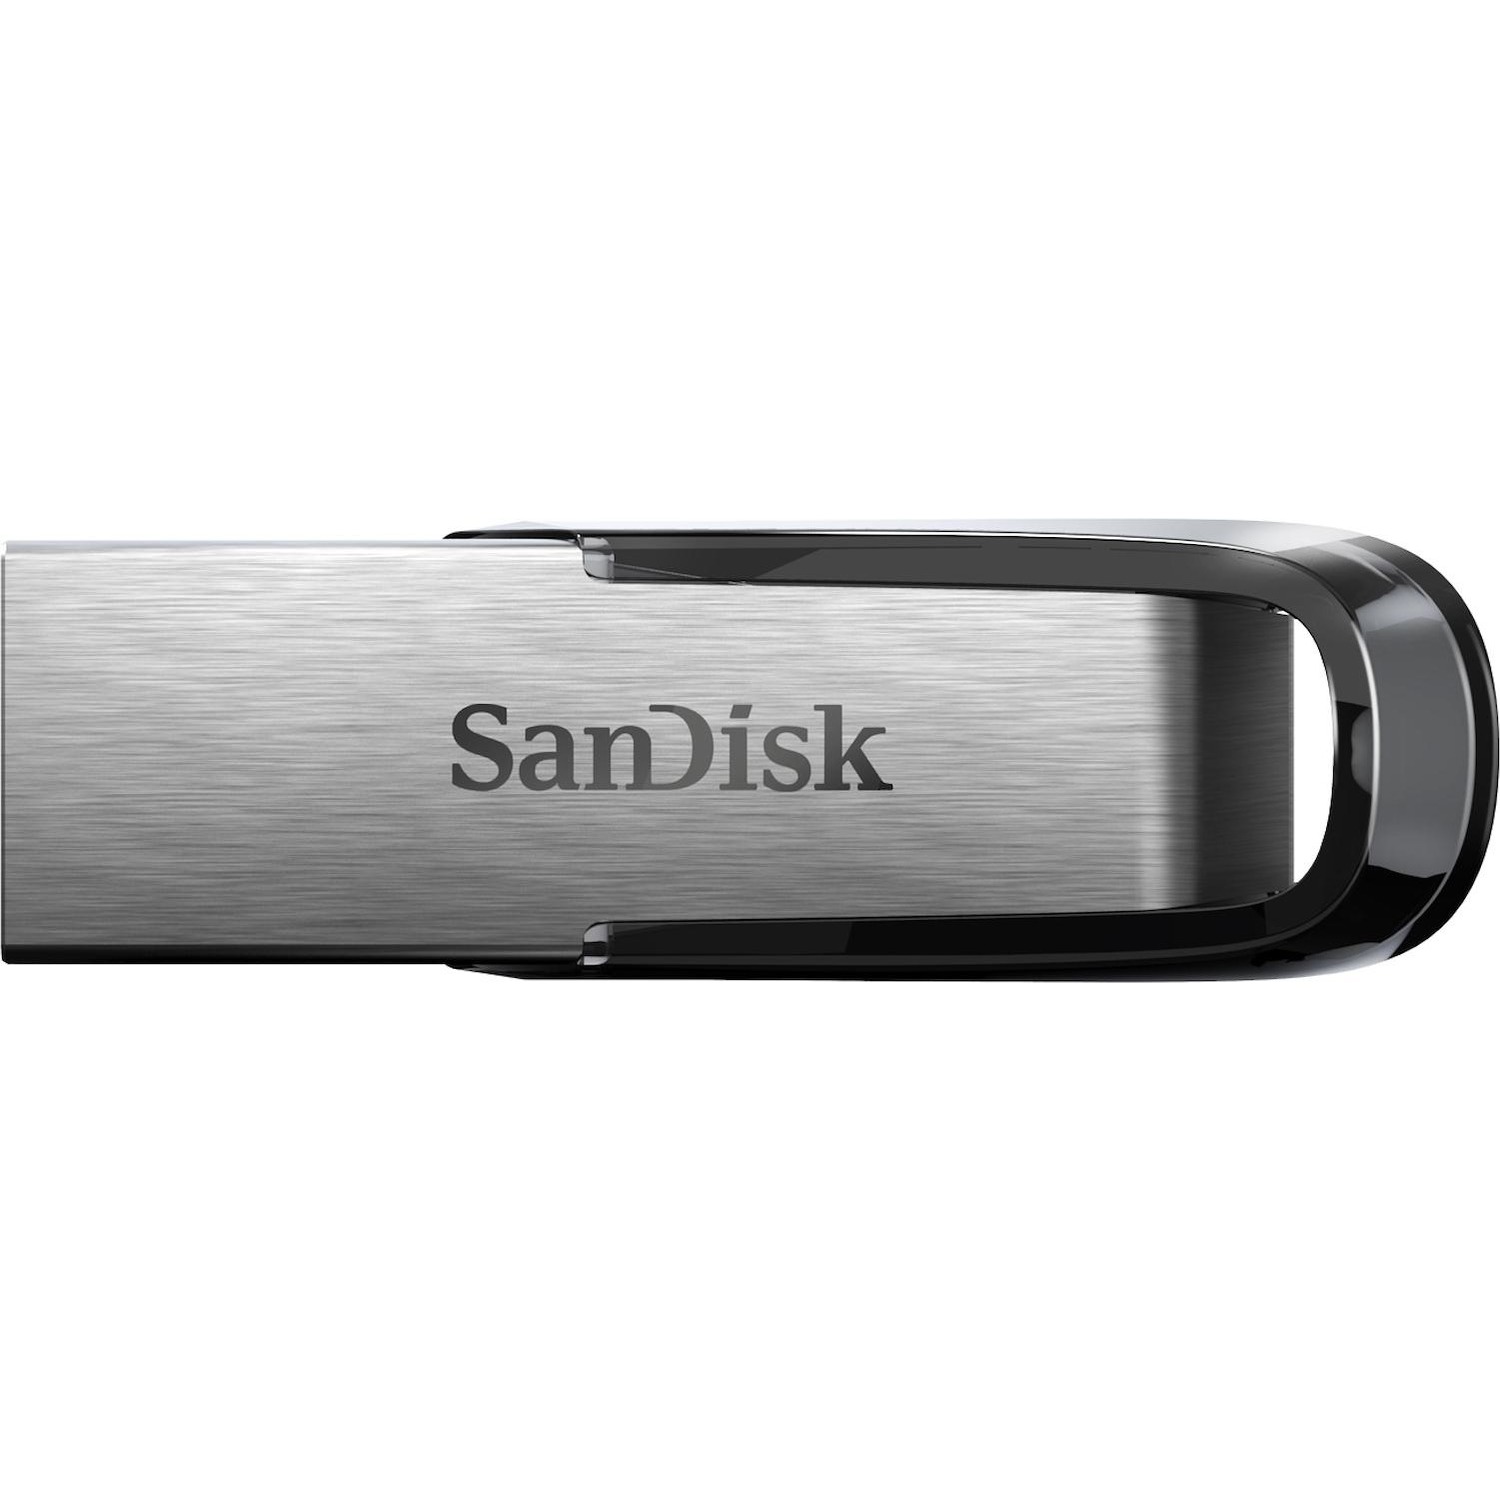 Immagine per Memoria USB San Disk 16 GB Ultra Flair da DIMOStore